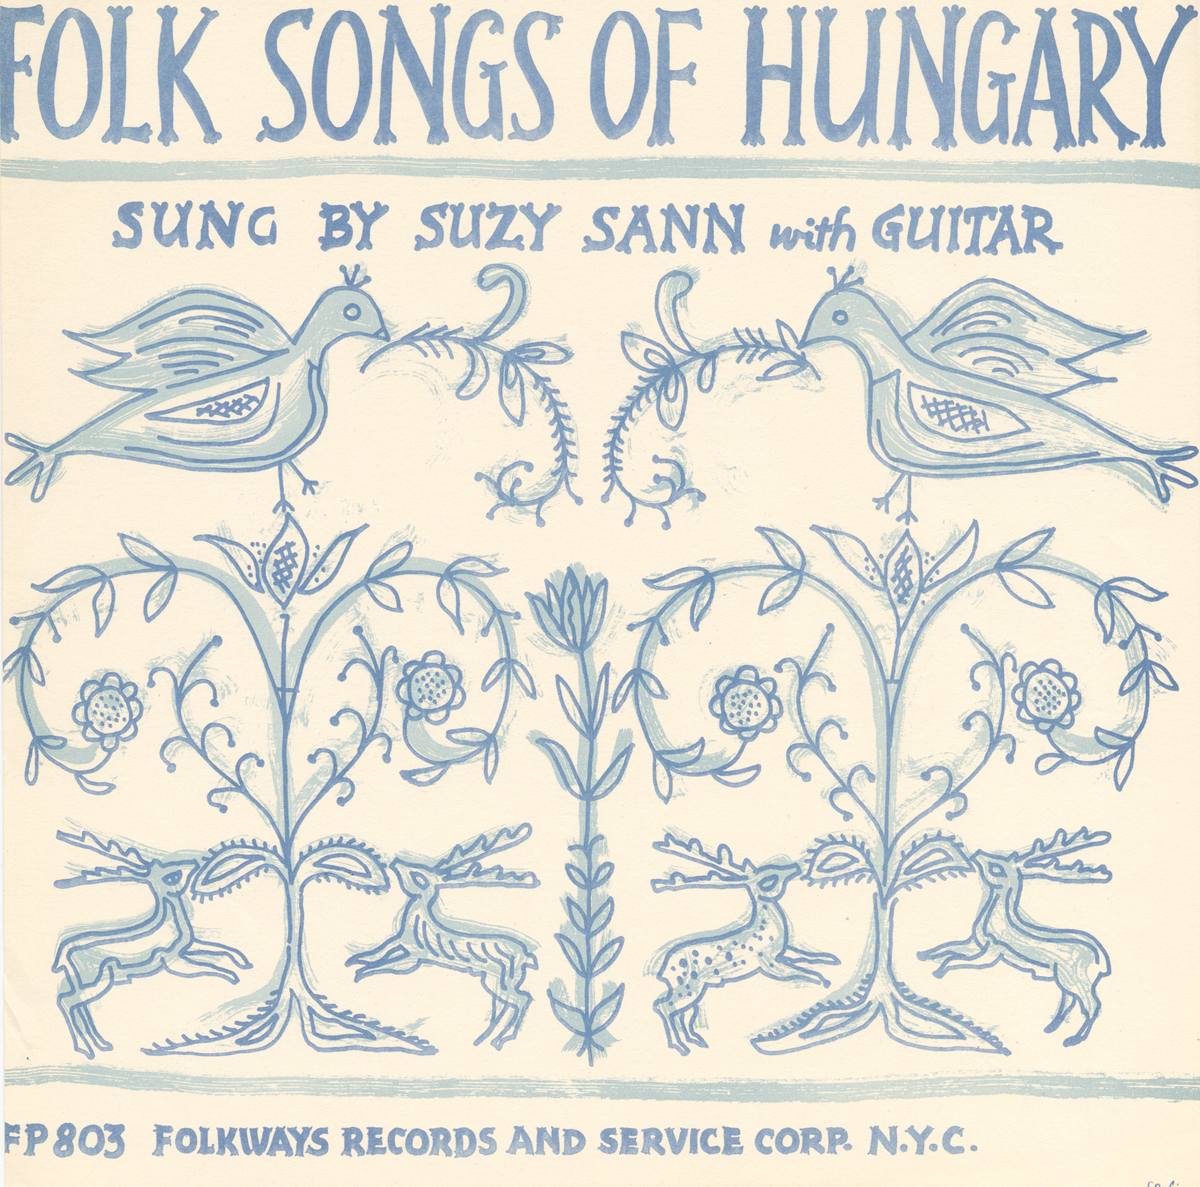 FOLK SONGS OF HUNGARY